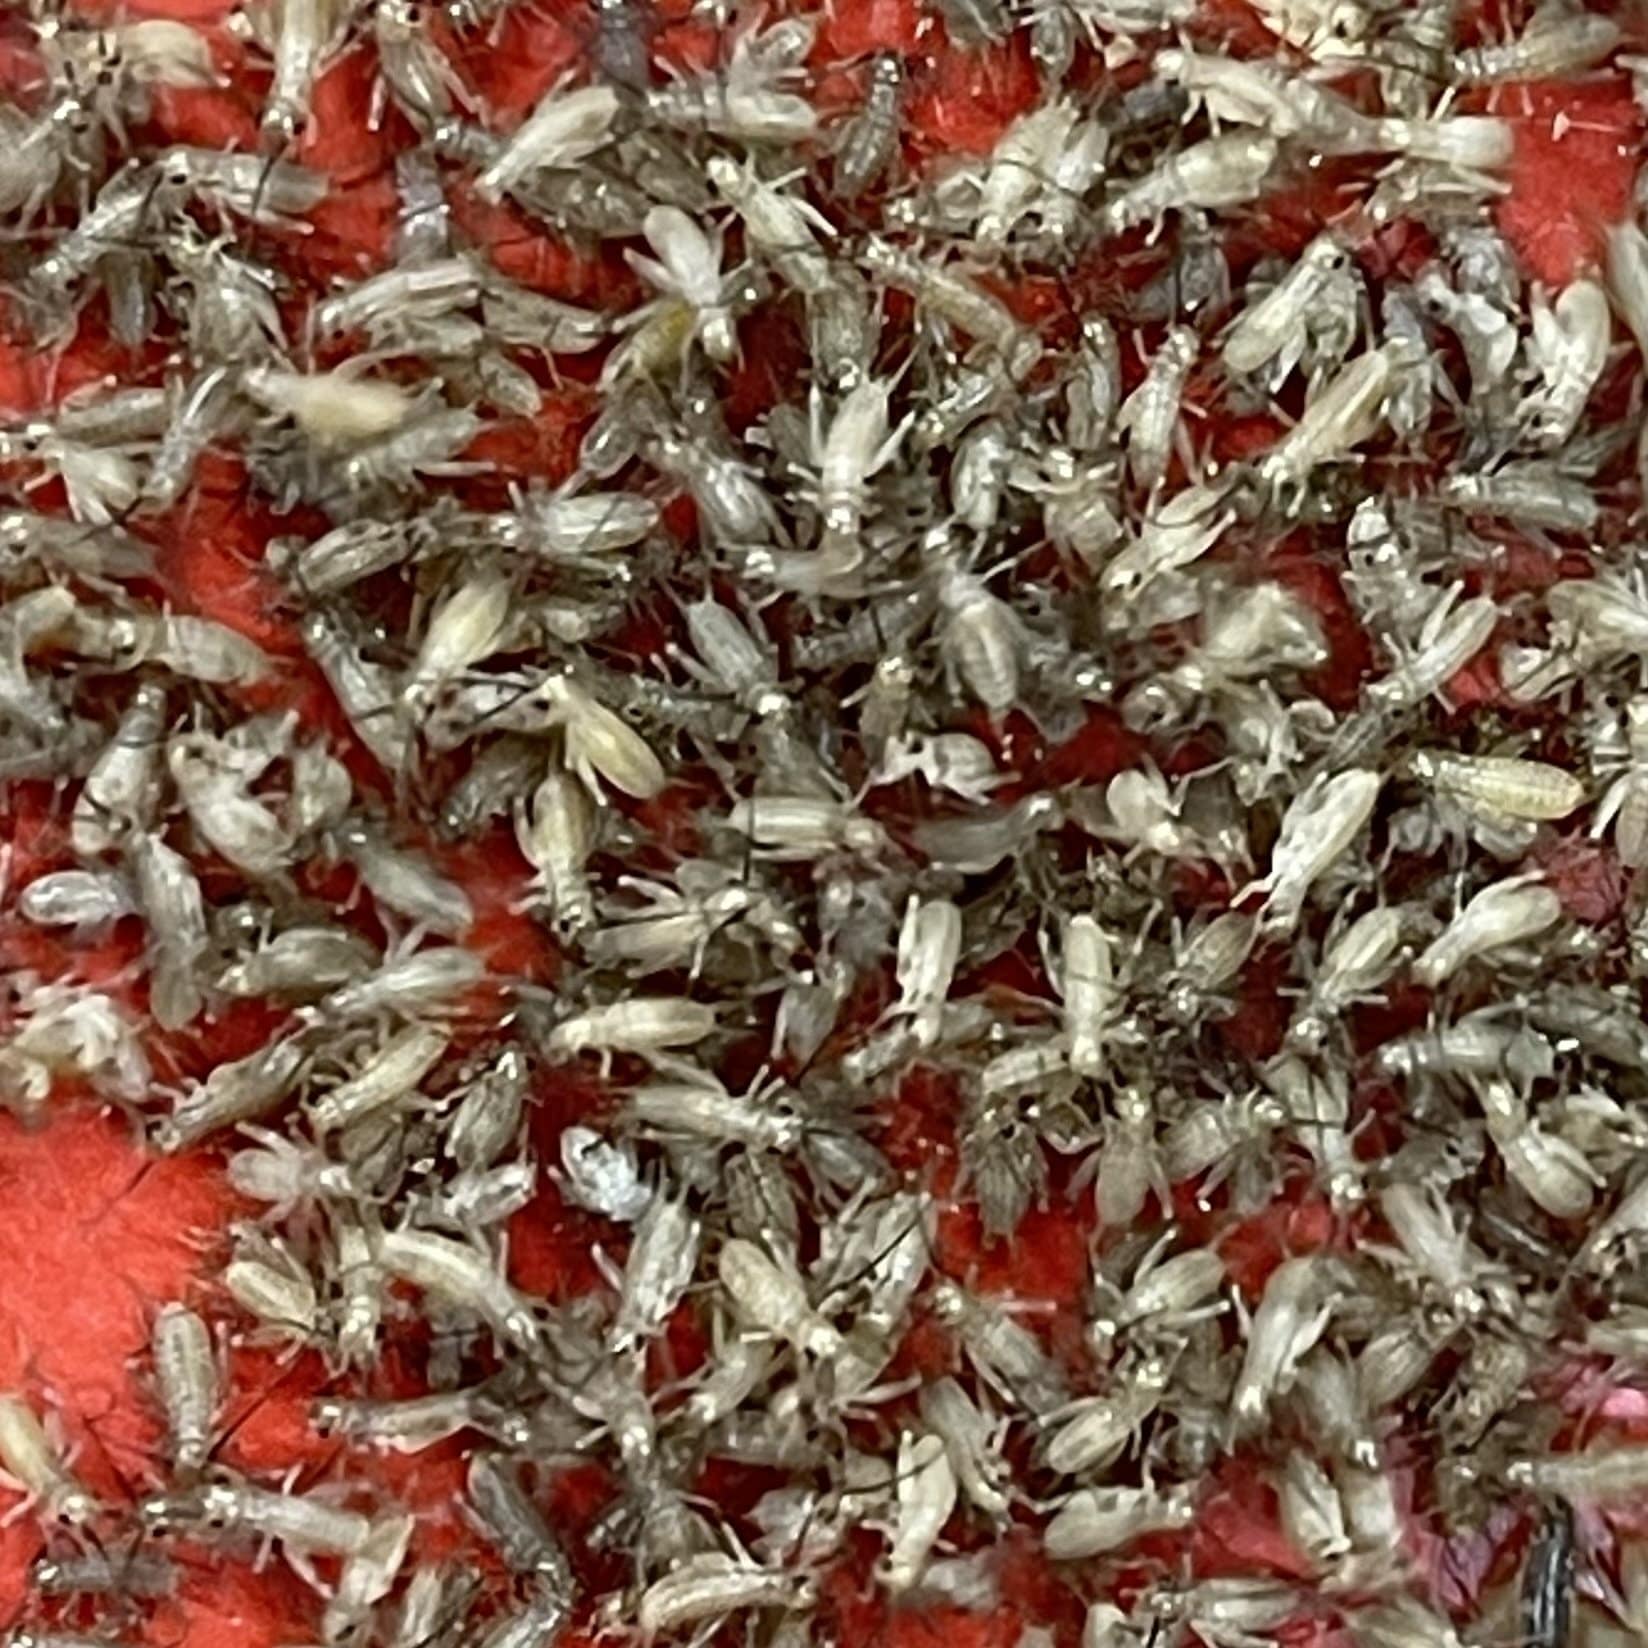 Pisces Enterprises Live Food Bulk Bulk Extra-Small Crickets (3000 Crickets)